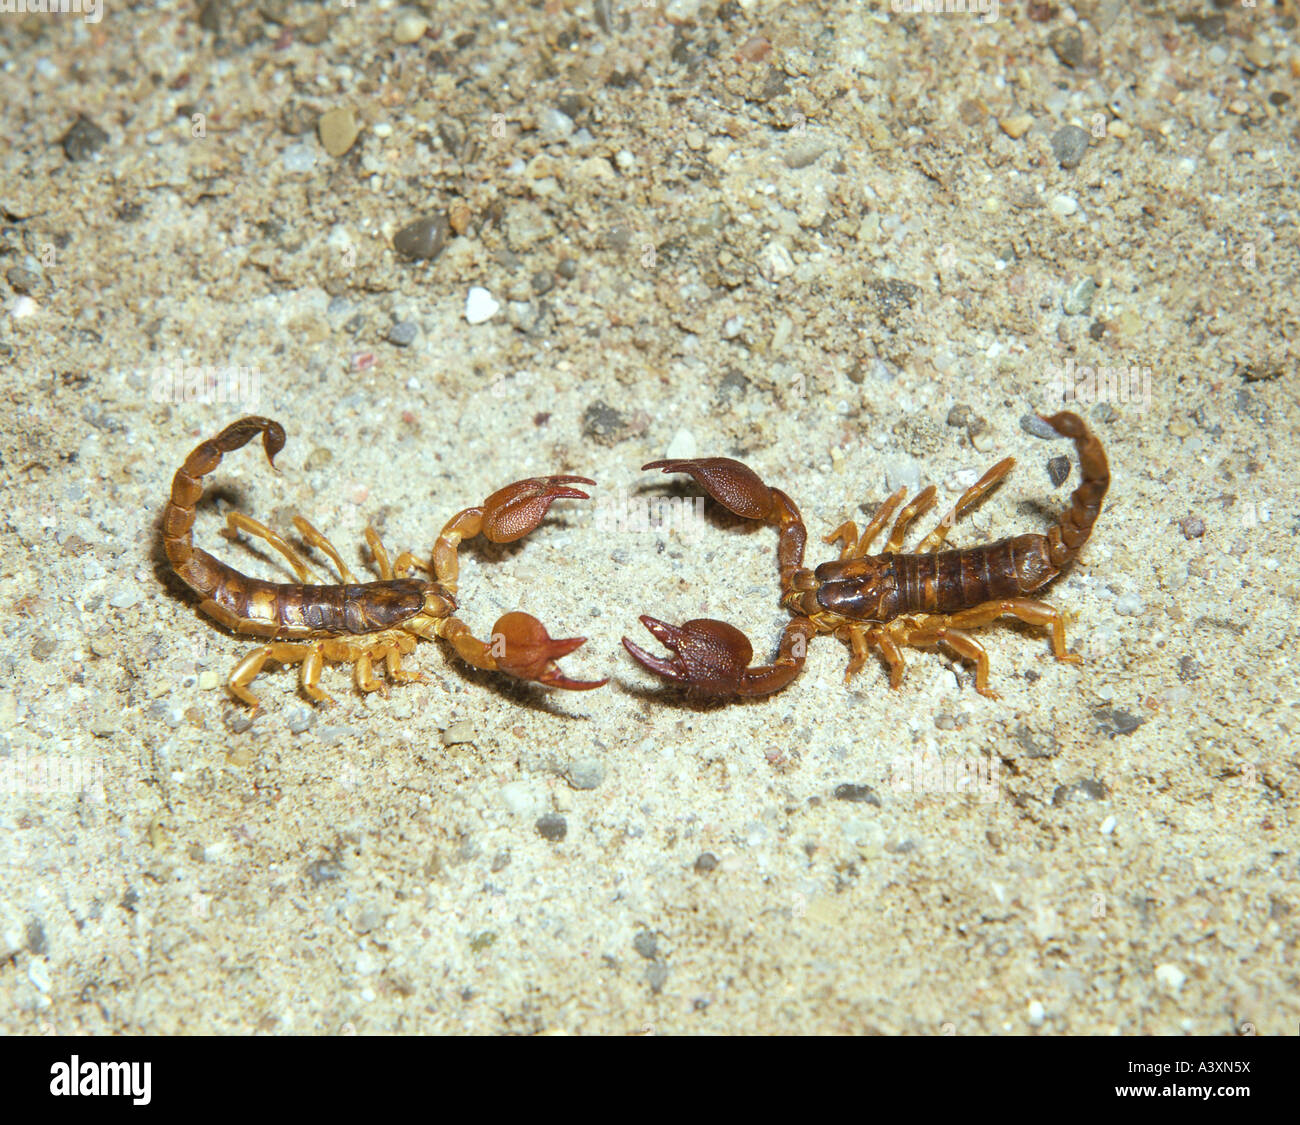 zoology /animals, arachnid, scorpions, Common European scorpion, (Buthus occitanus), two scorpions in fight pose, distribution: Stock Photo